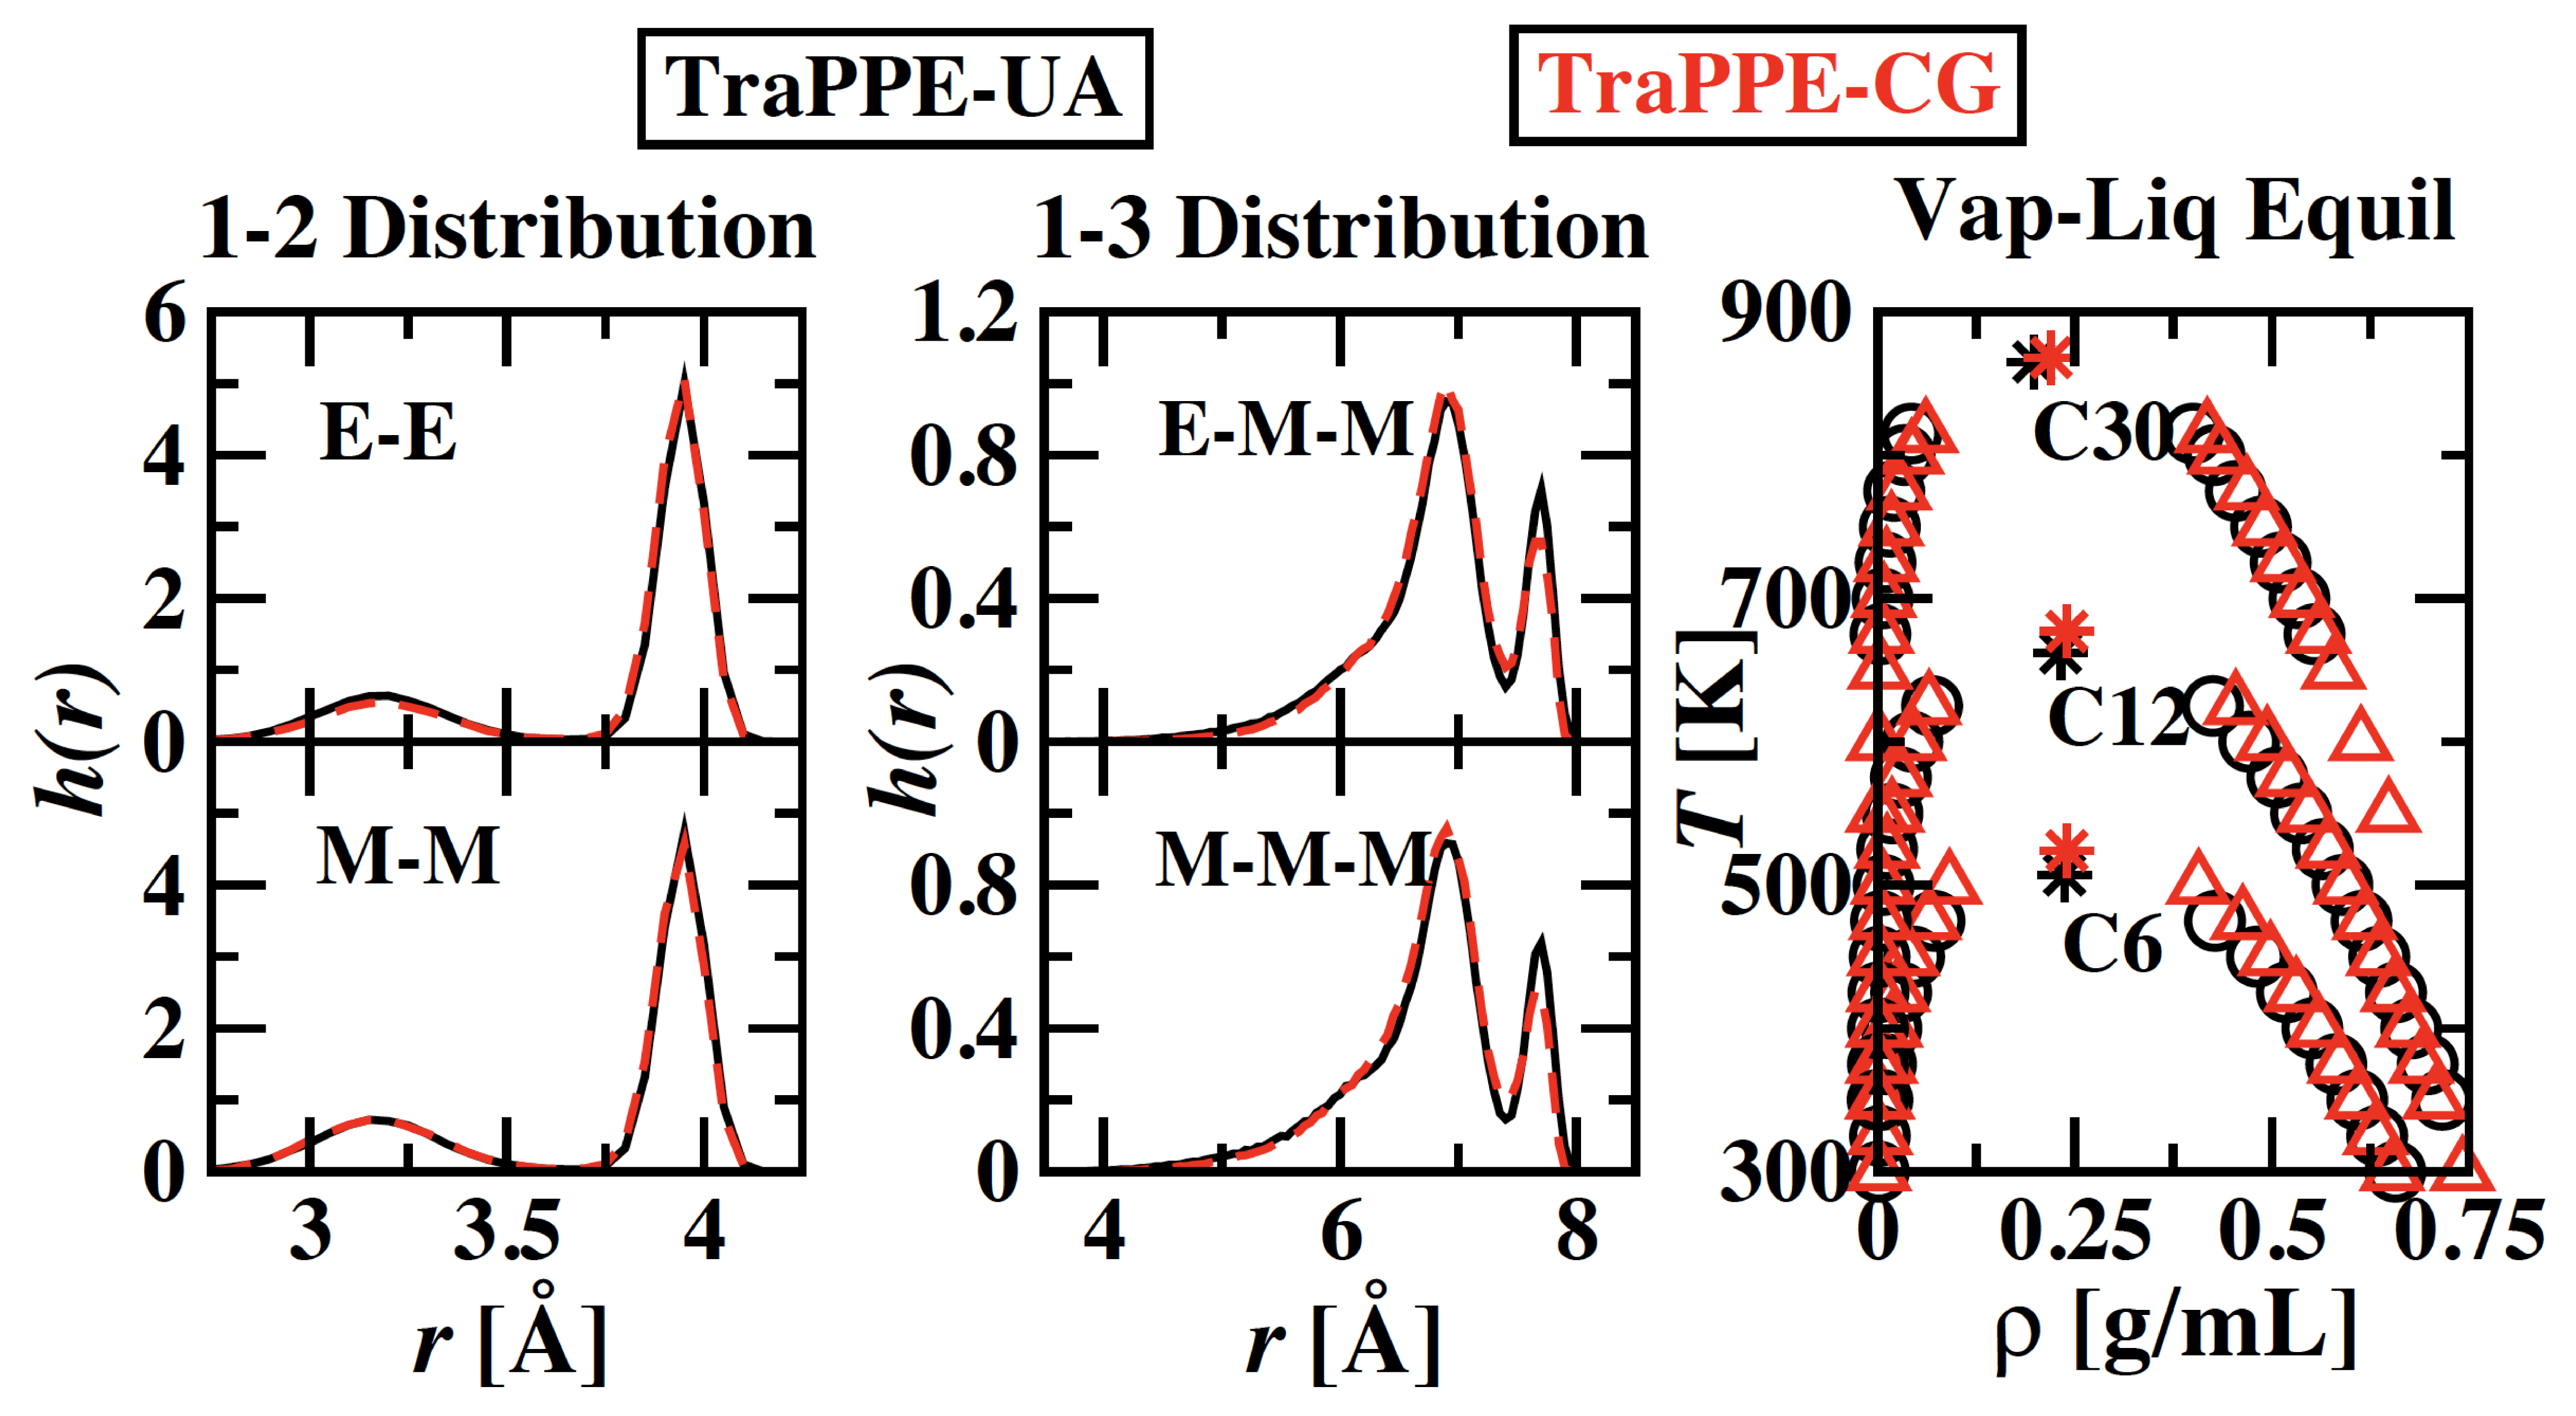 TraPPE-CG